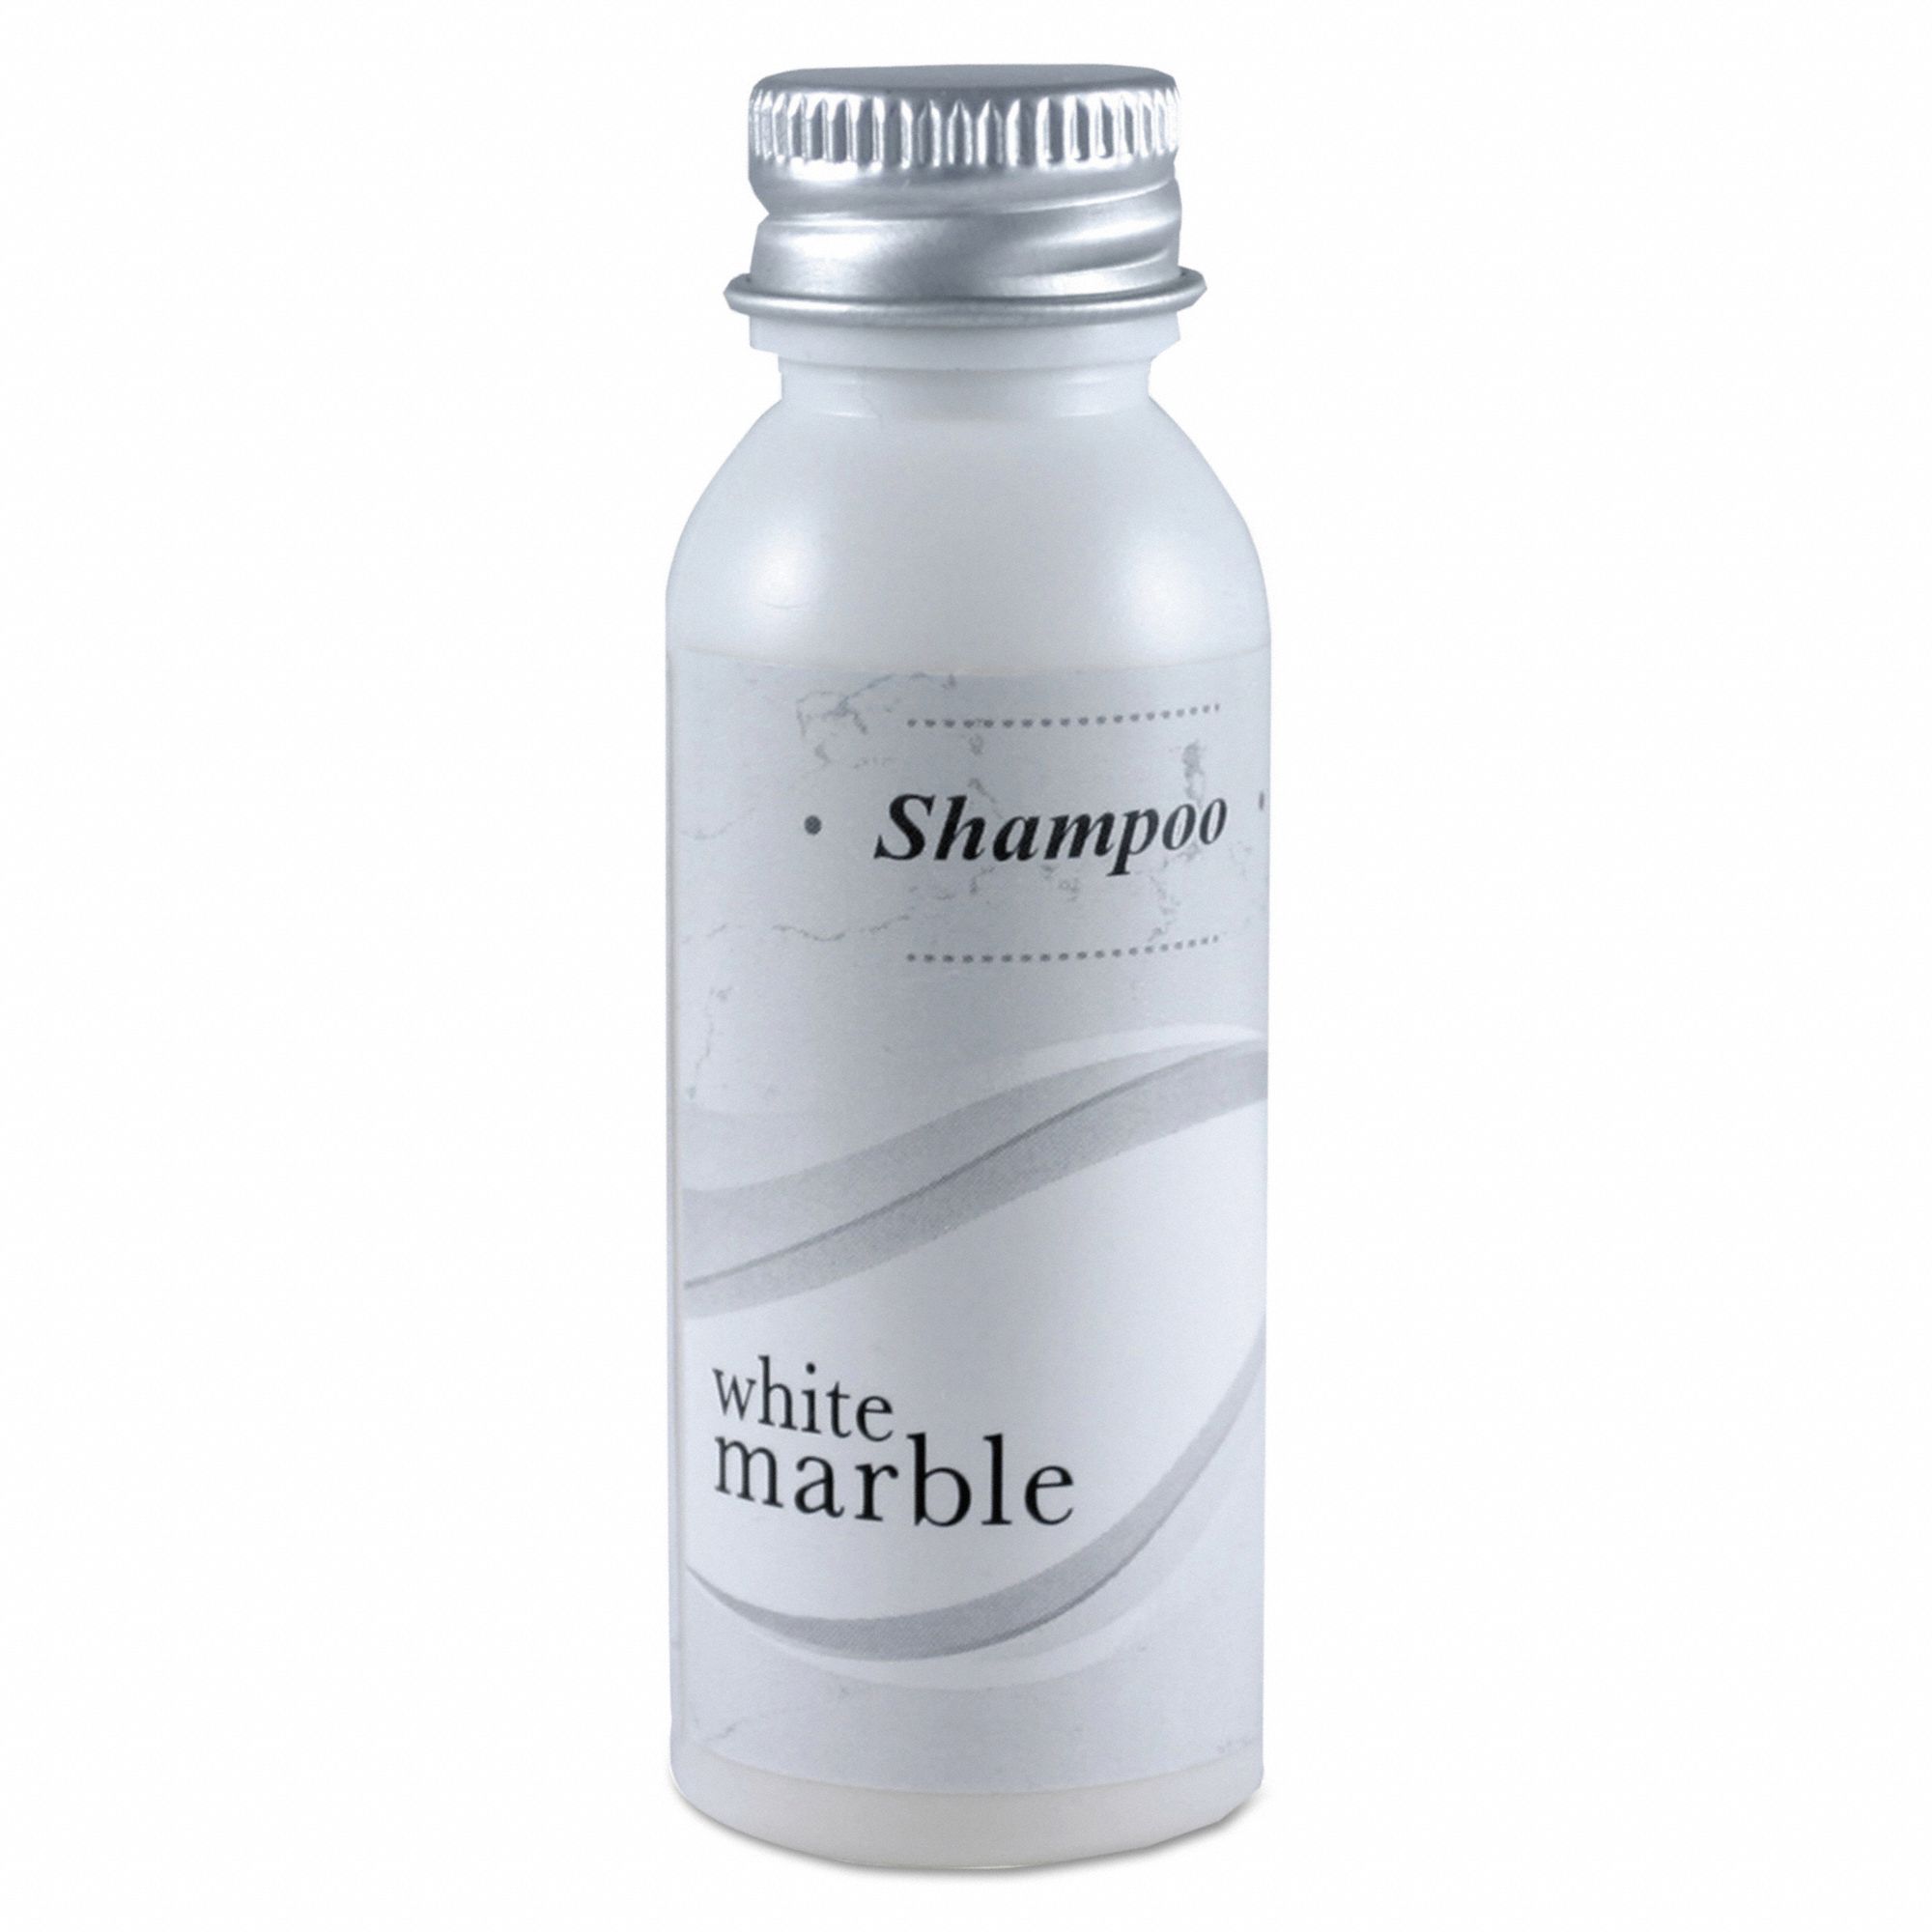 Shampoo: Squeeze Bottle, 0.75 oz Size, Clean, White Marble, Aloe Vera, 288 PK